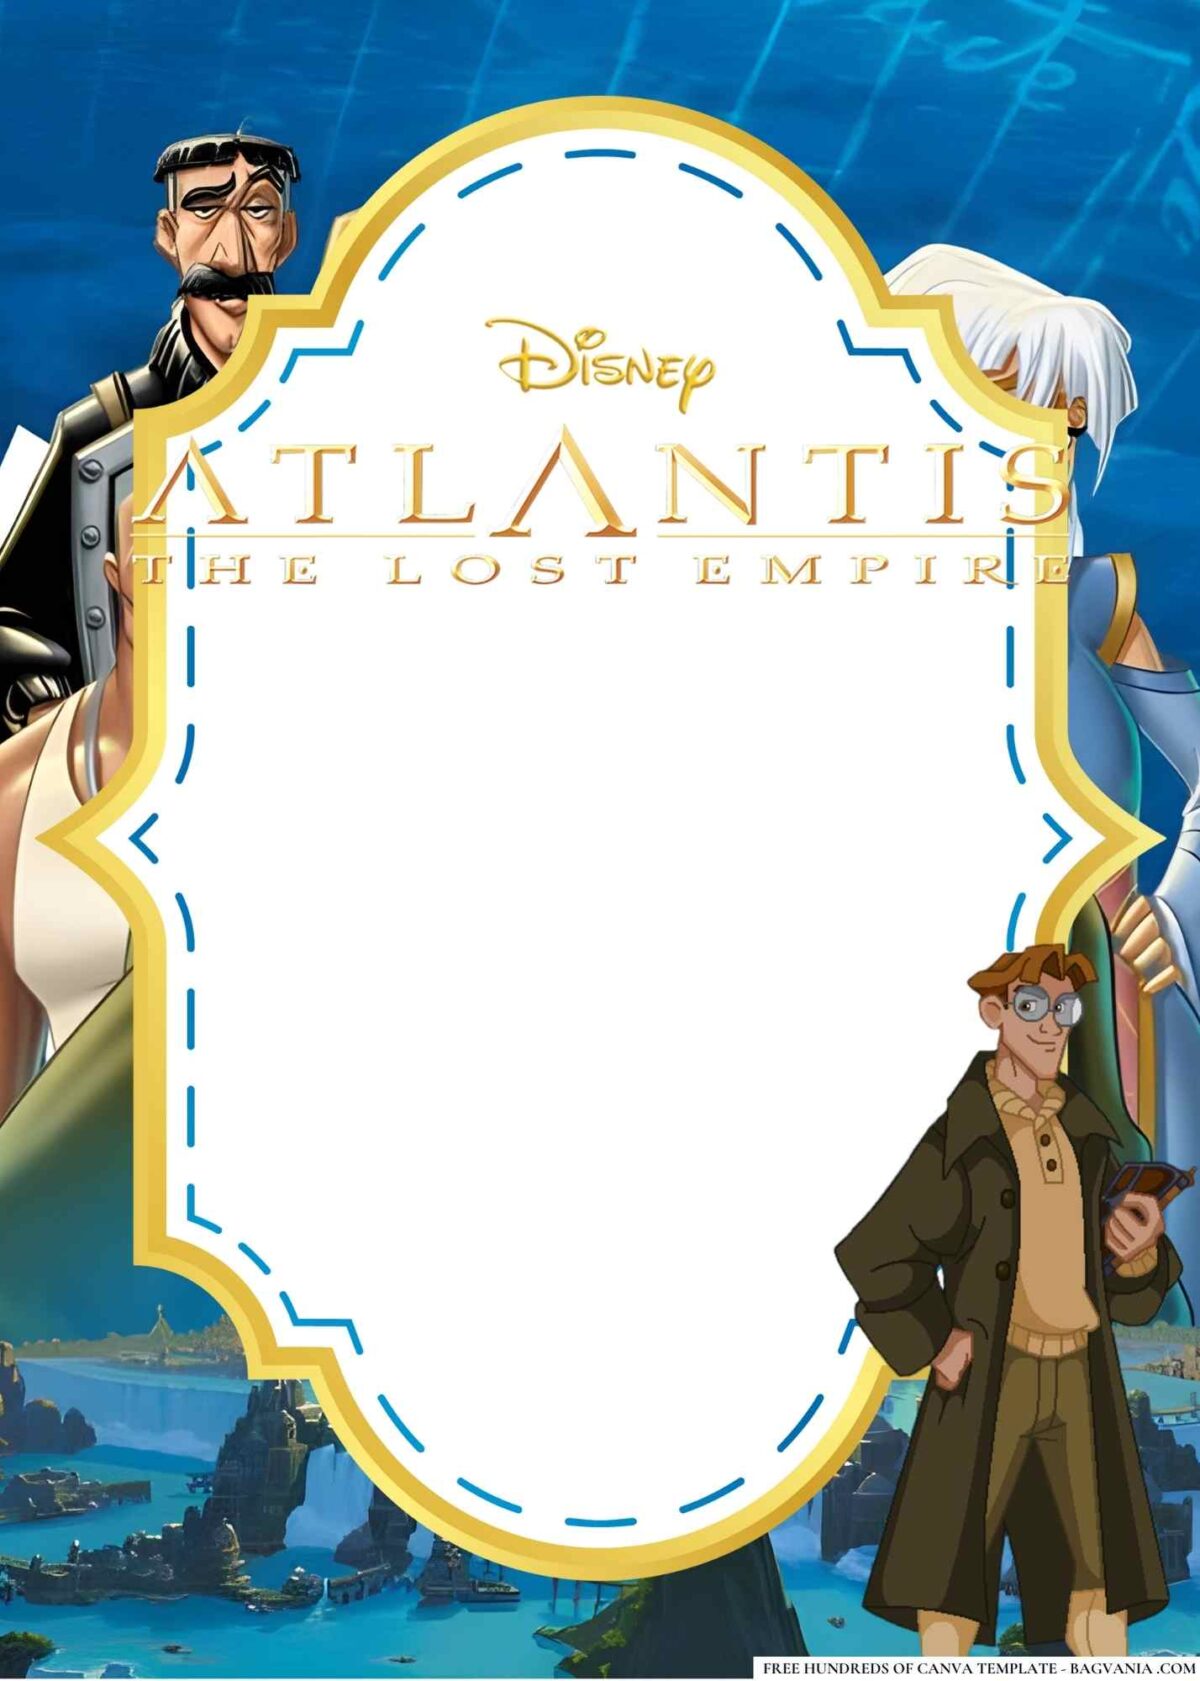 FREE Editable Atlantis The Lost Empire Baby Shower Invitation